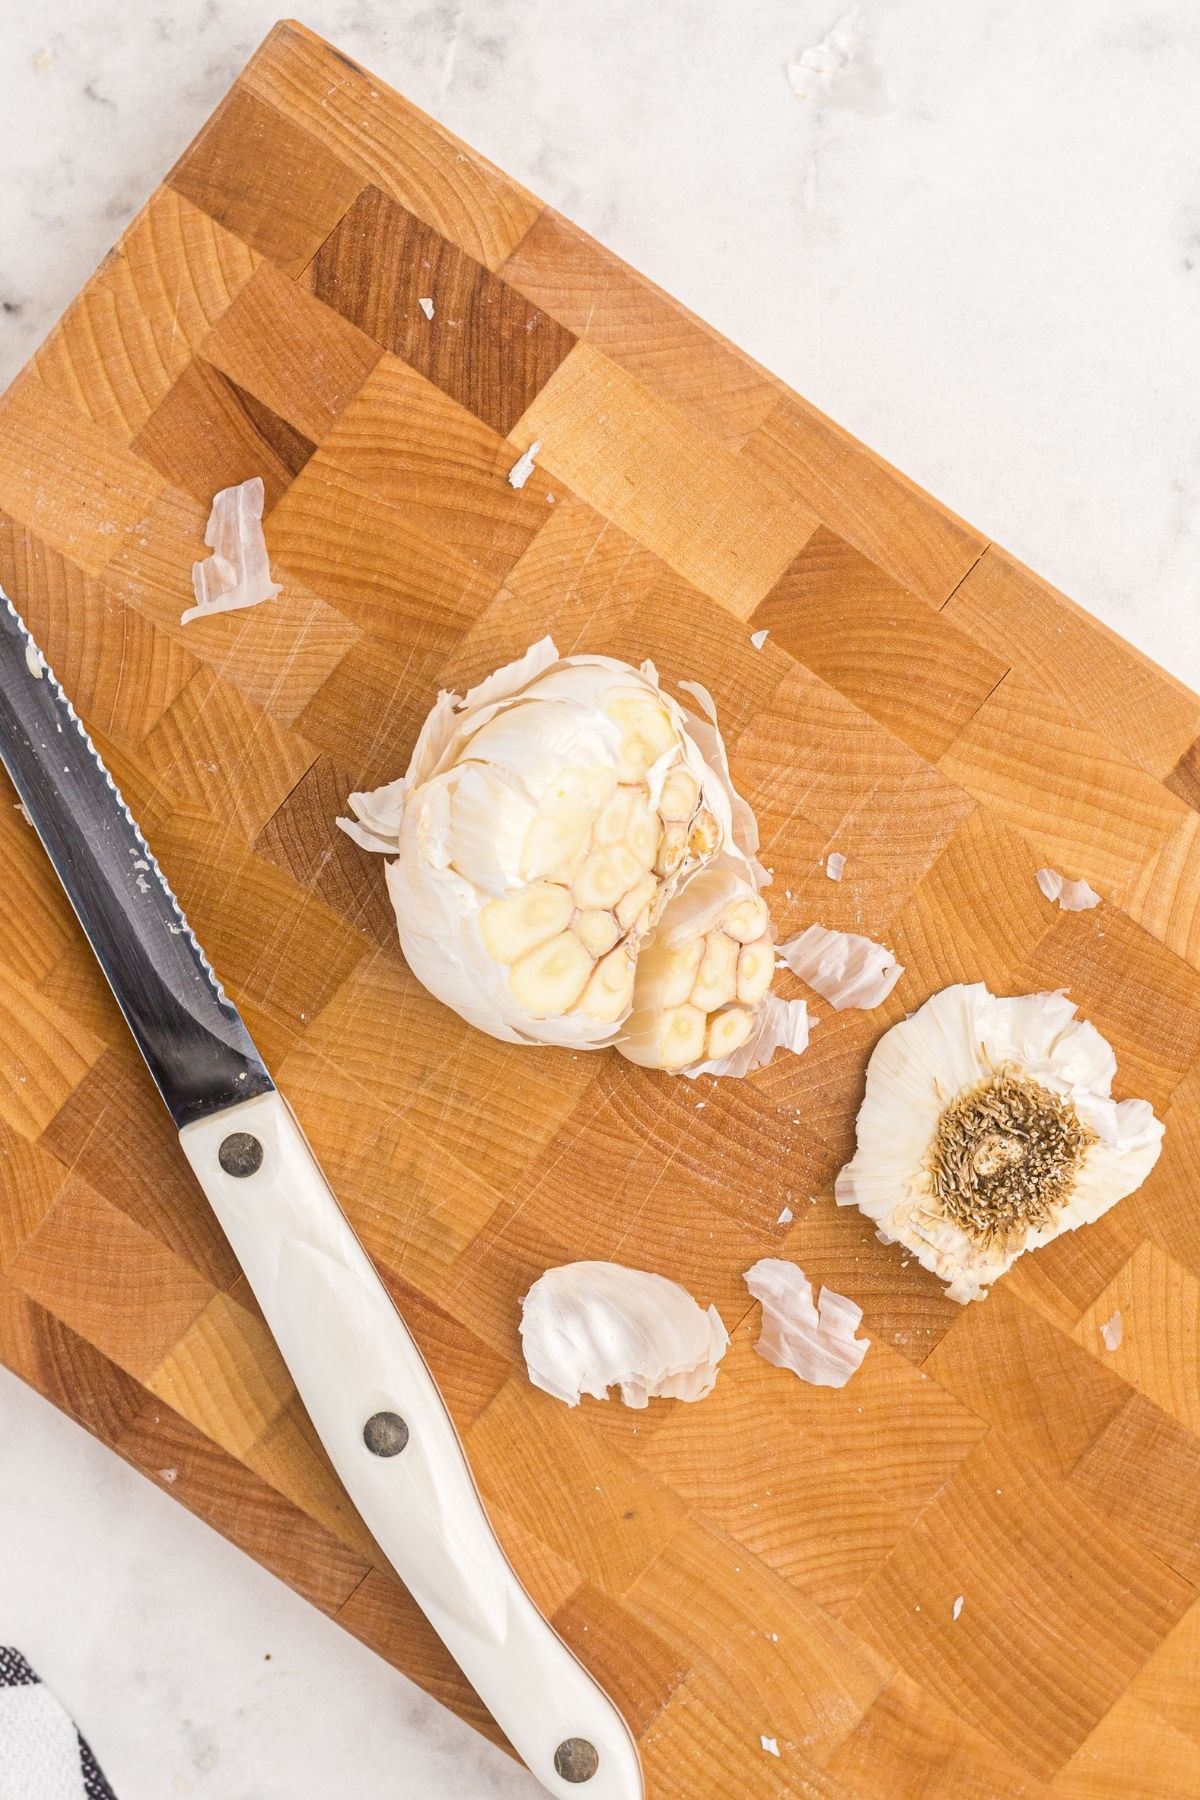 Garlic bulb with top cut off on a wooden cutting board